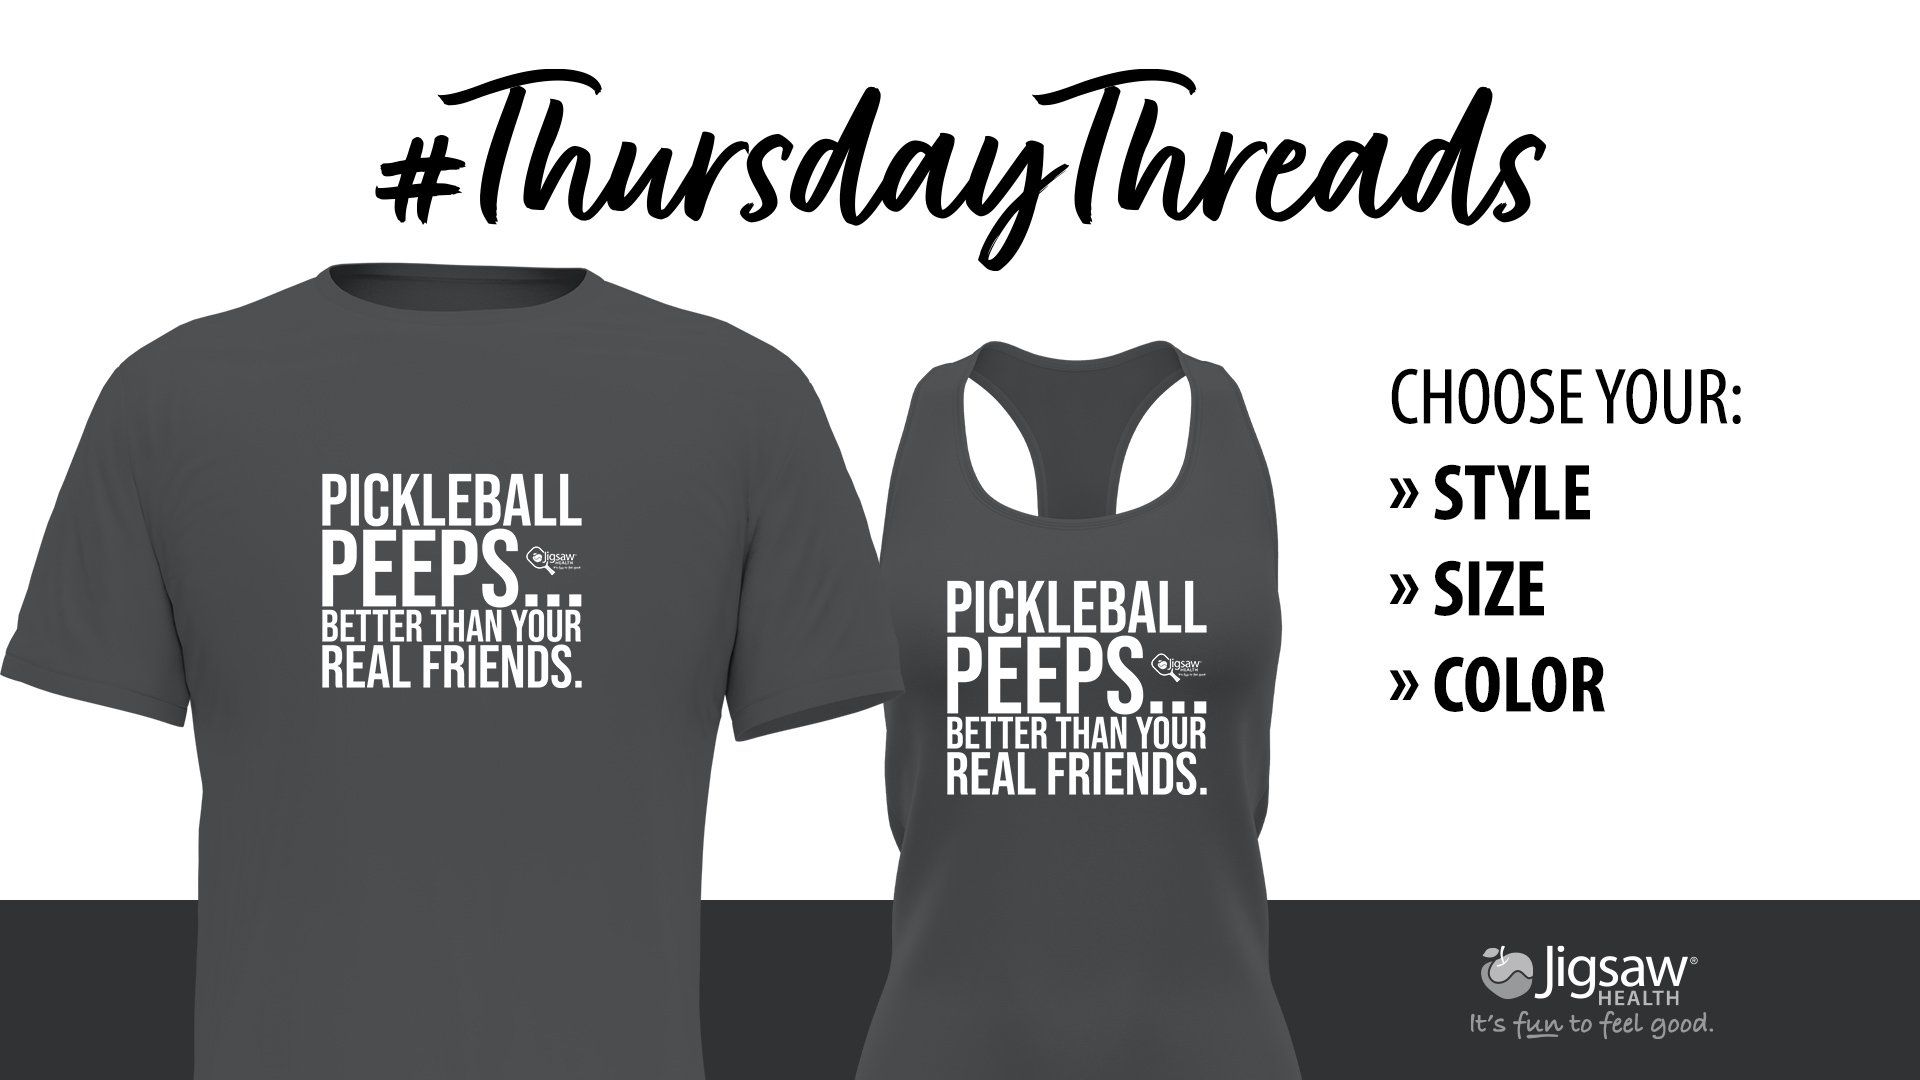 Pickleball Peeps better than your real friends t-shirt